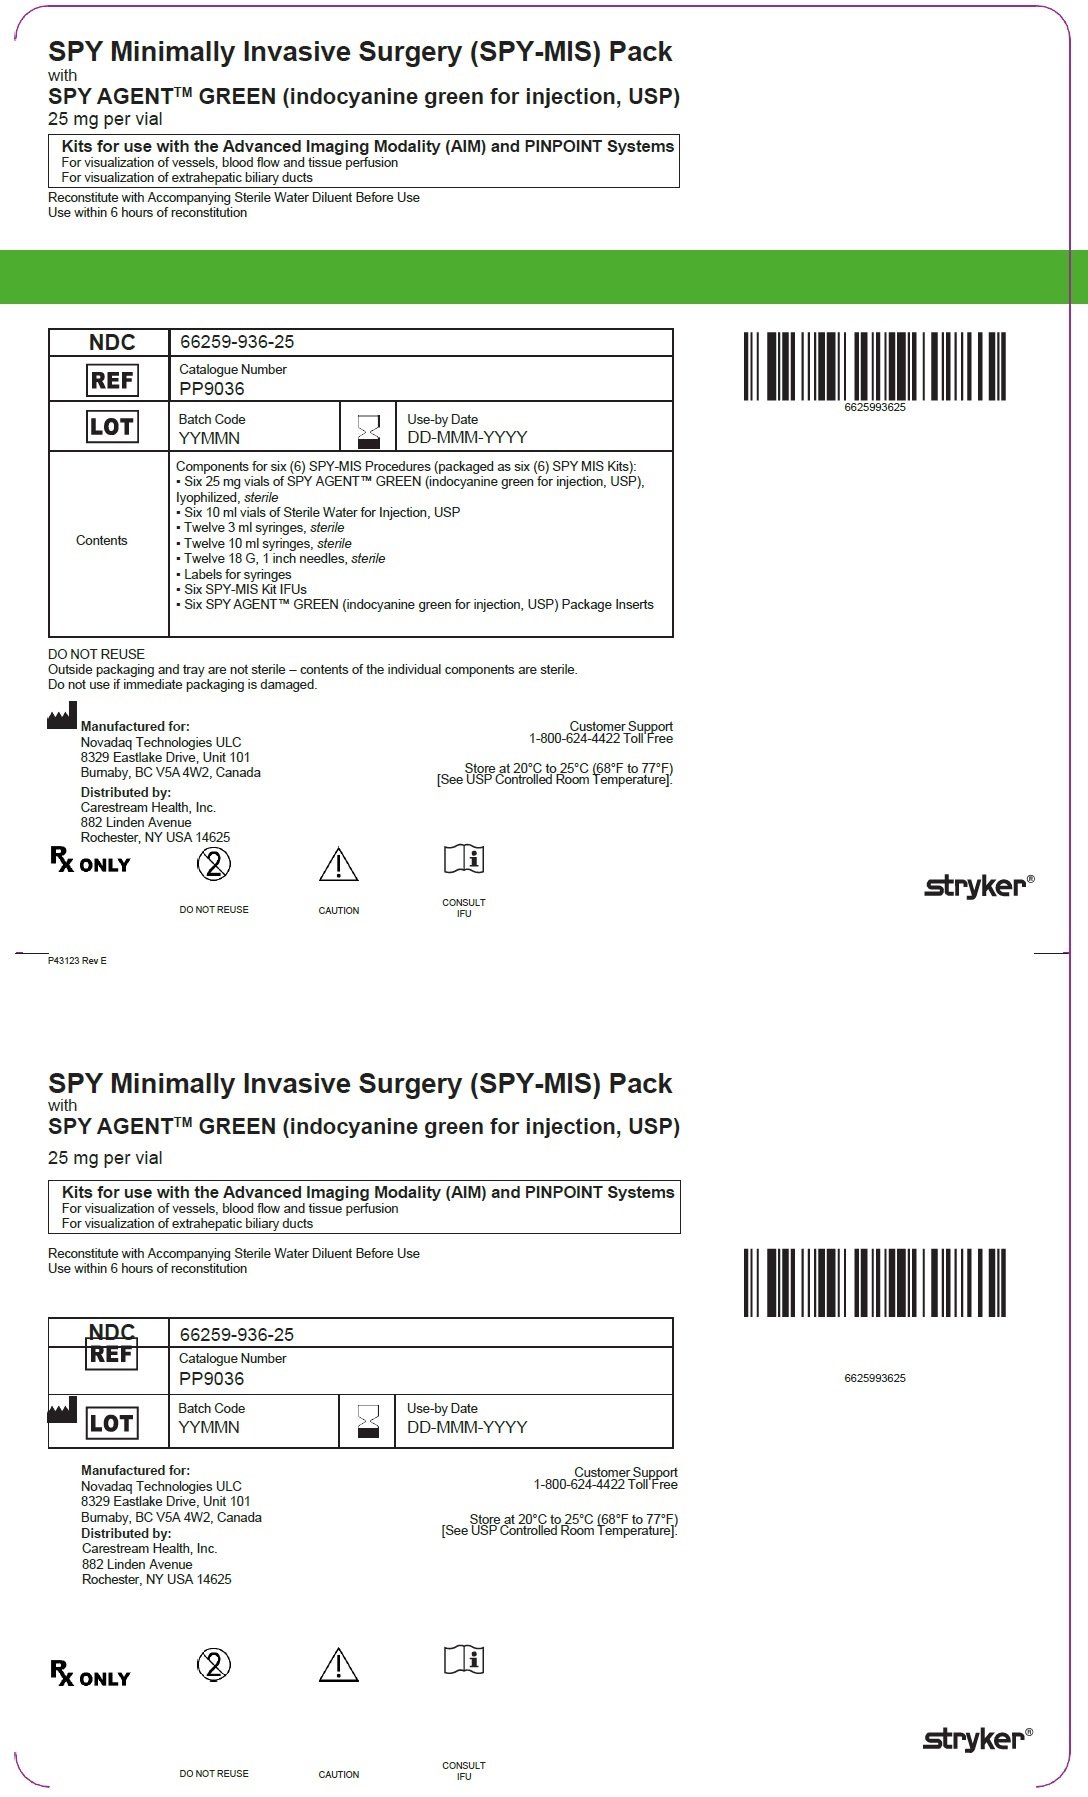 (SPY-MIS) Label Pack (Front)